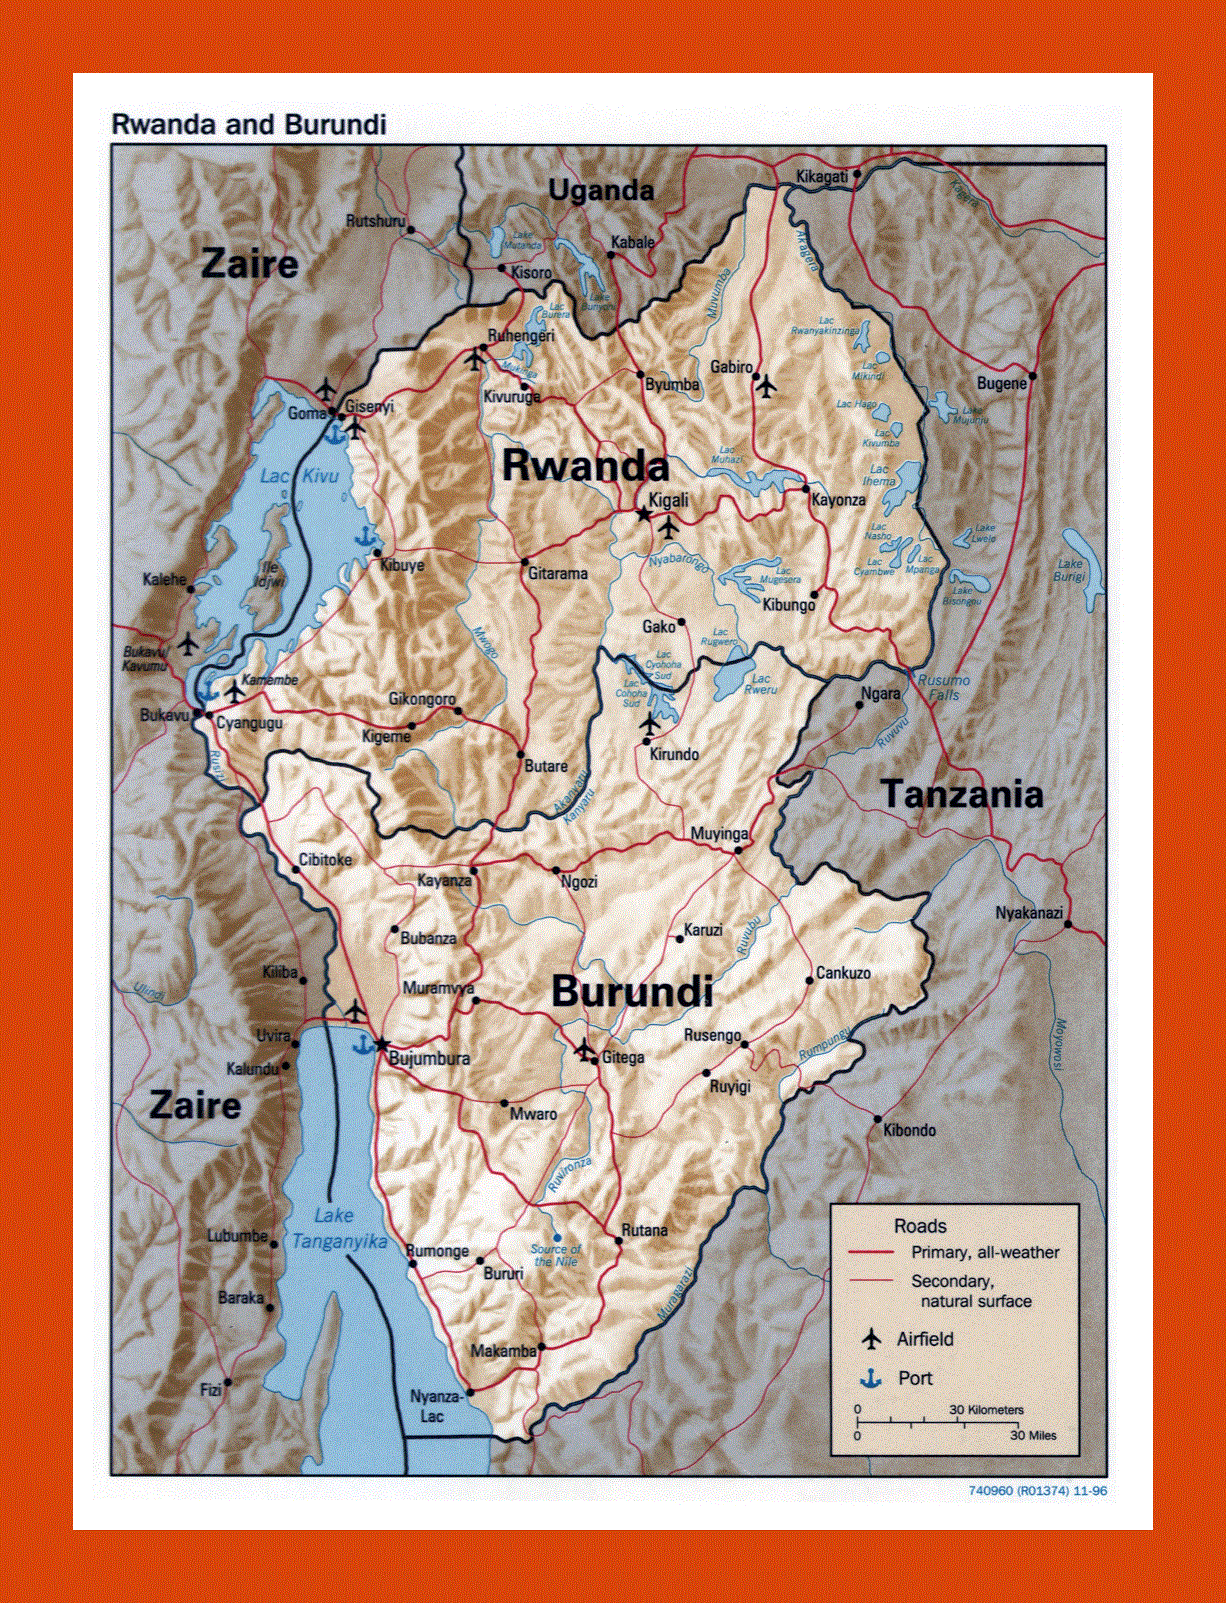 Political map of Rwanda and Burundi - 1996